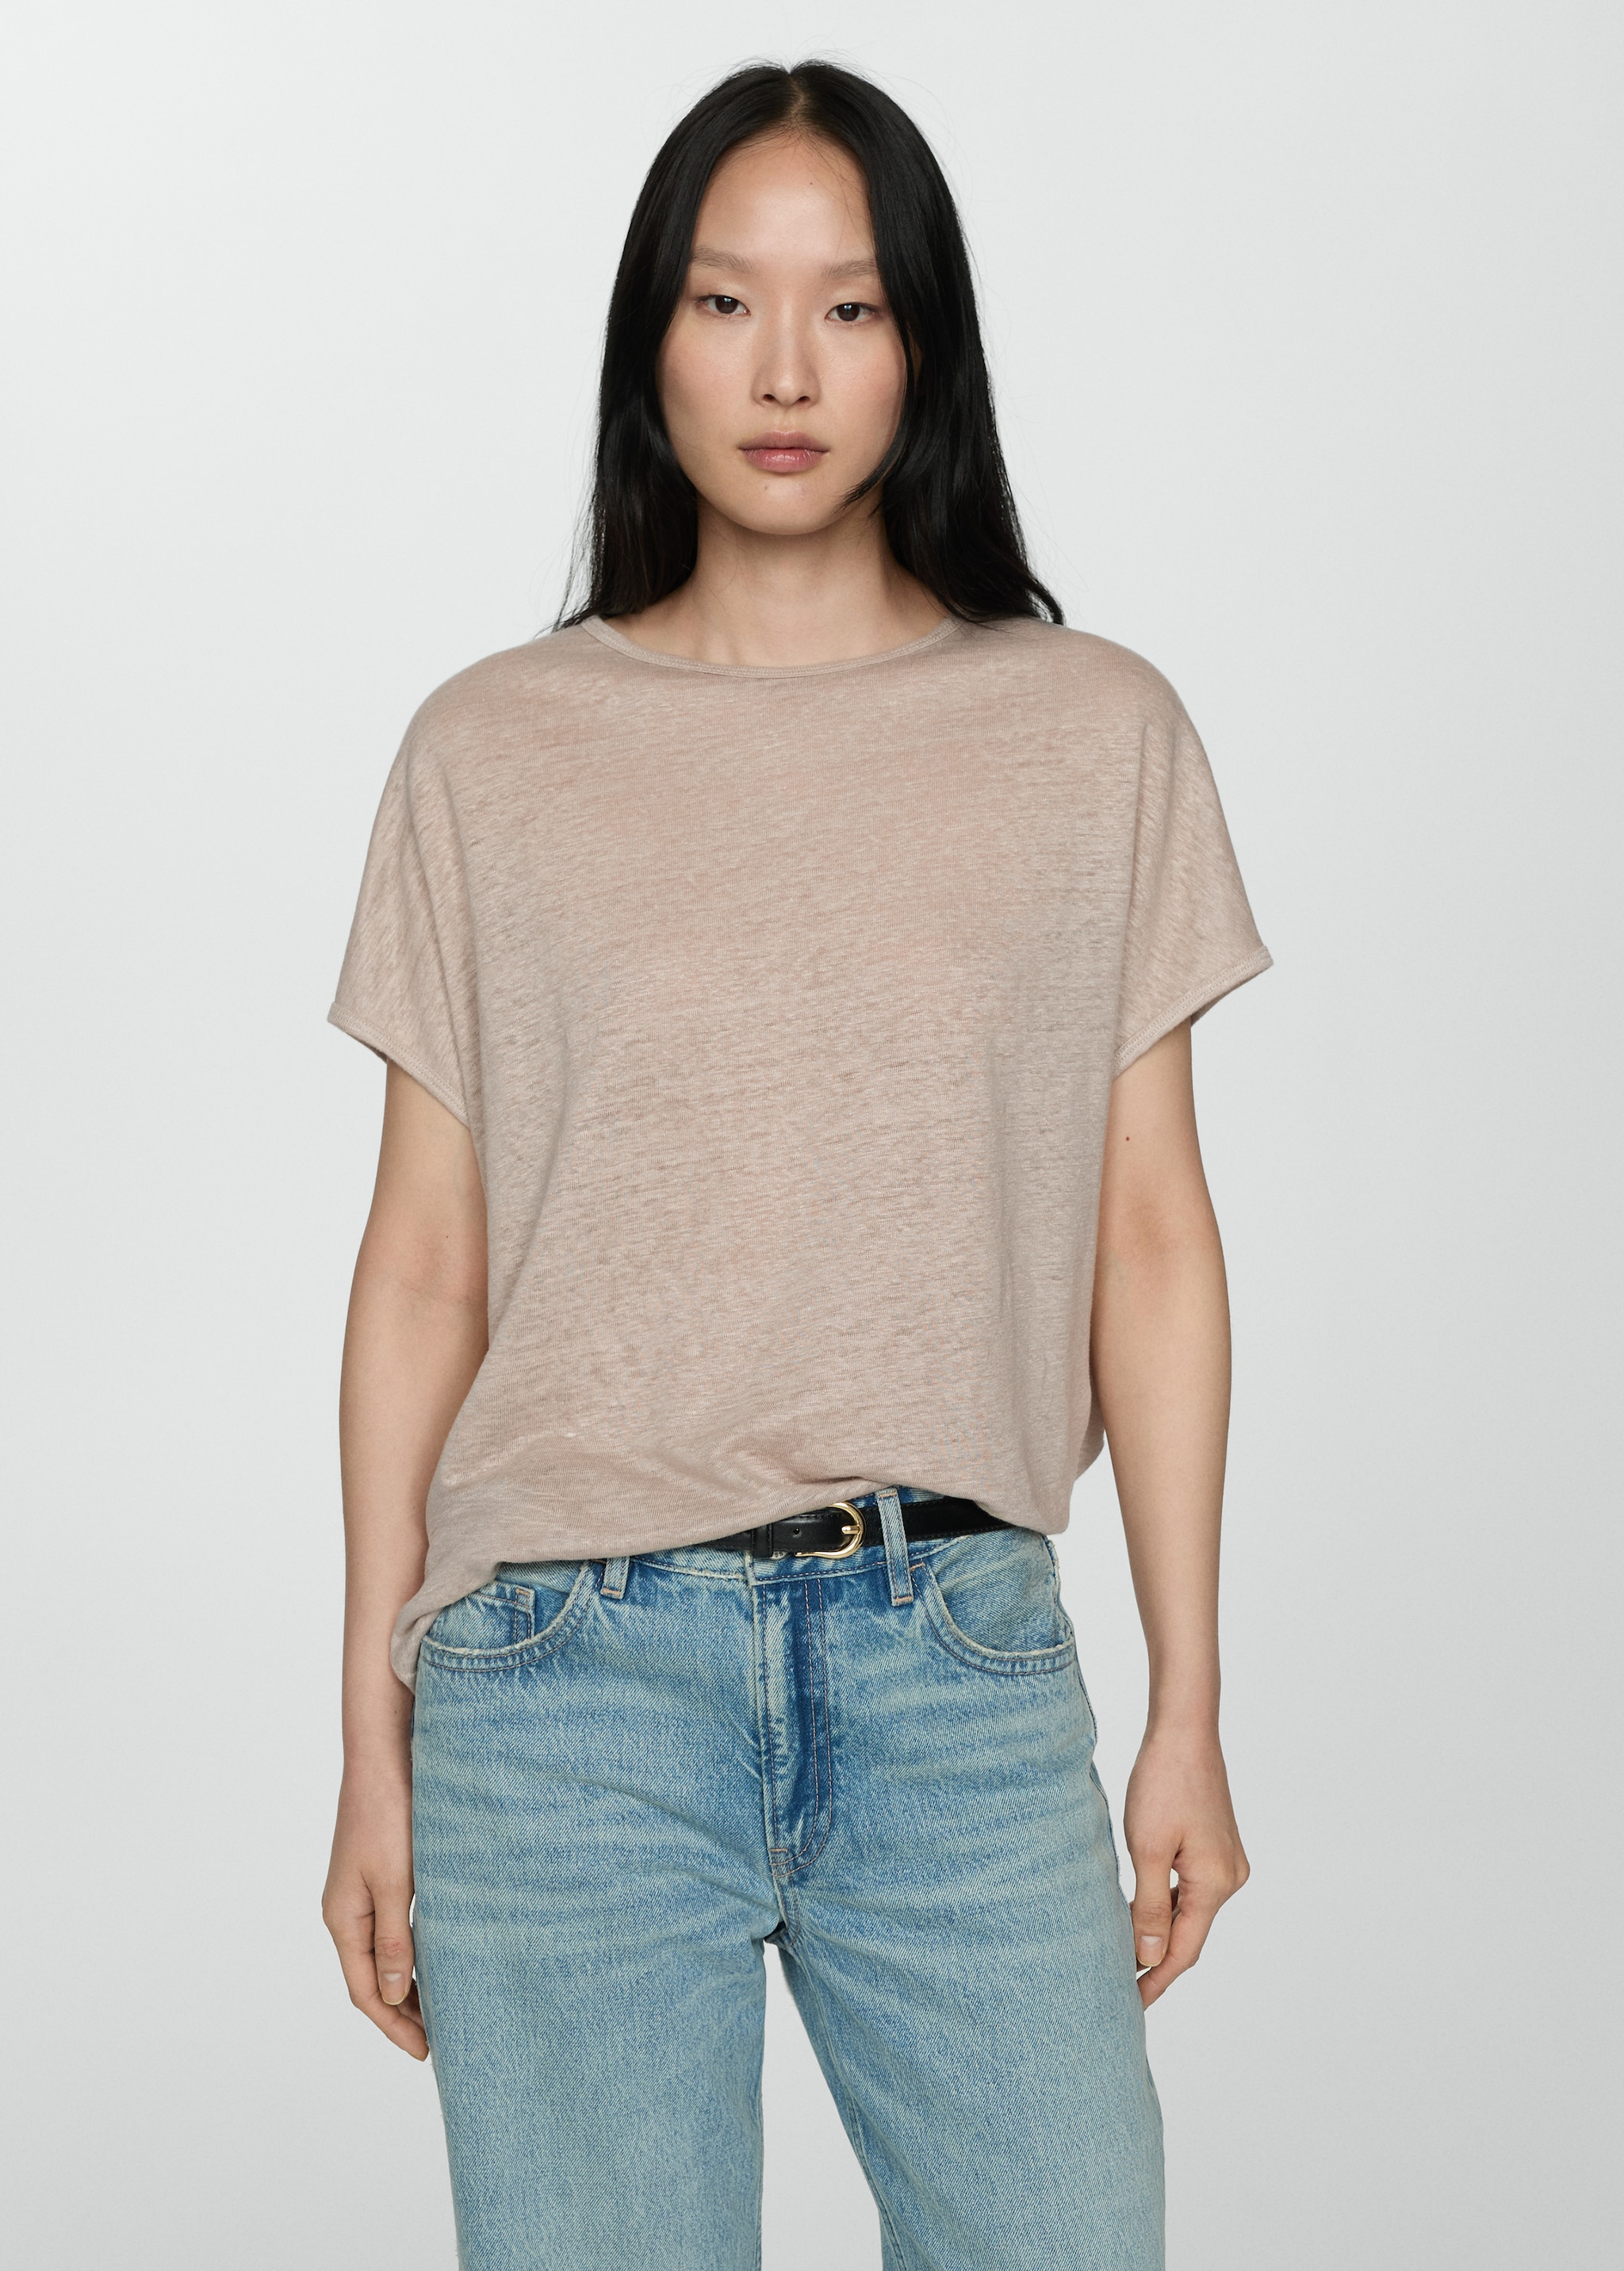 Short-sleeved linen t-shirt - Medium plane